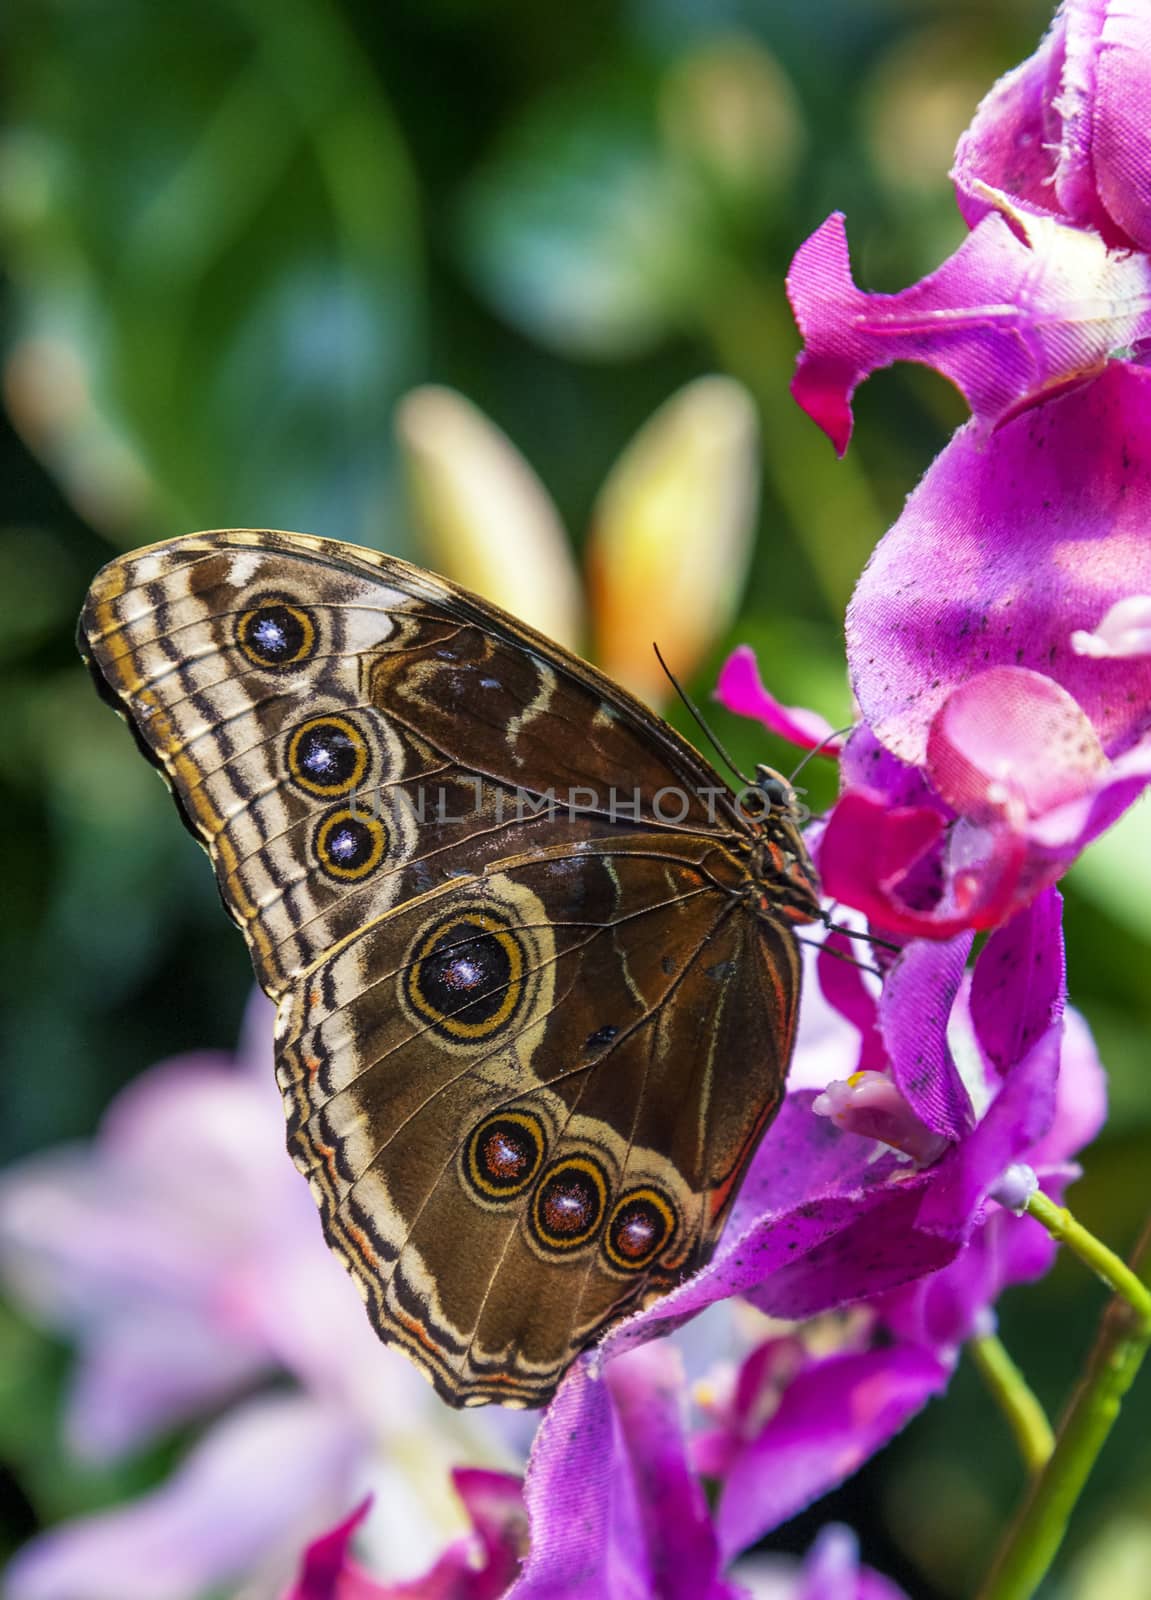 Caligo Eurilochus butterfly on a flower by Goodday